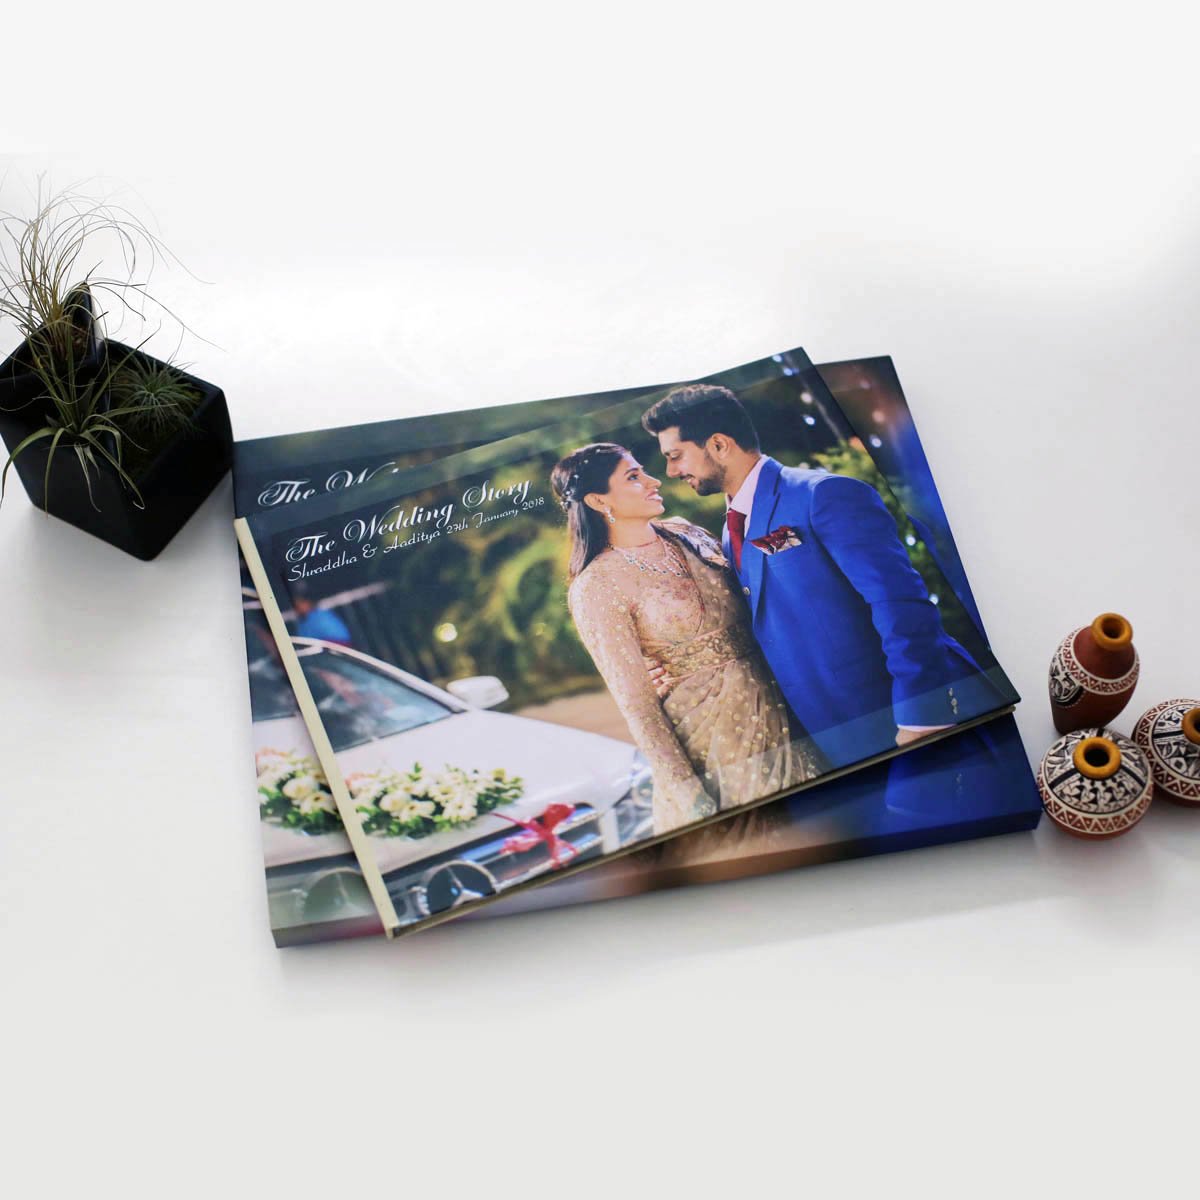 Buy Classic Hardbound Album. Buy Best Wedding Photo Albums